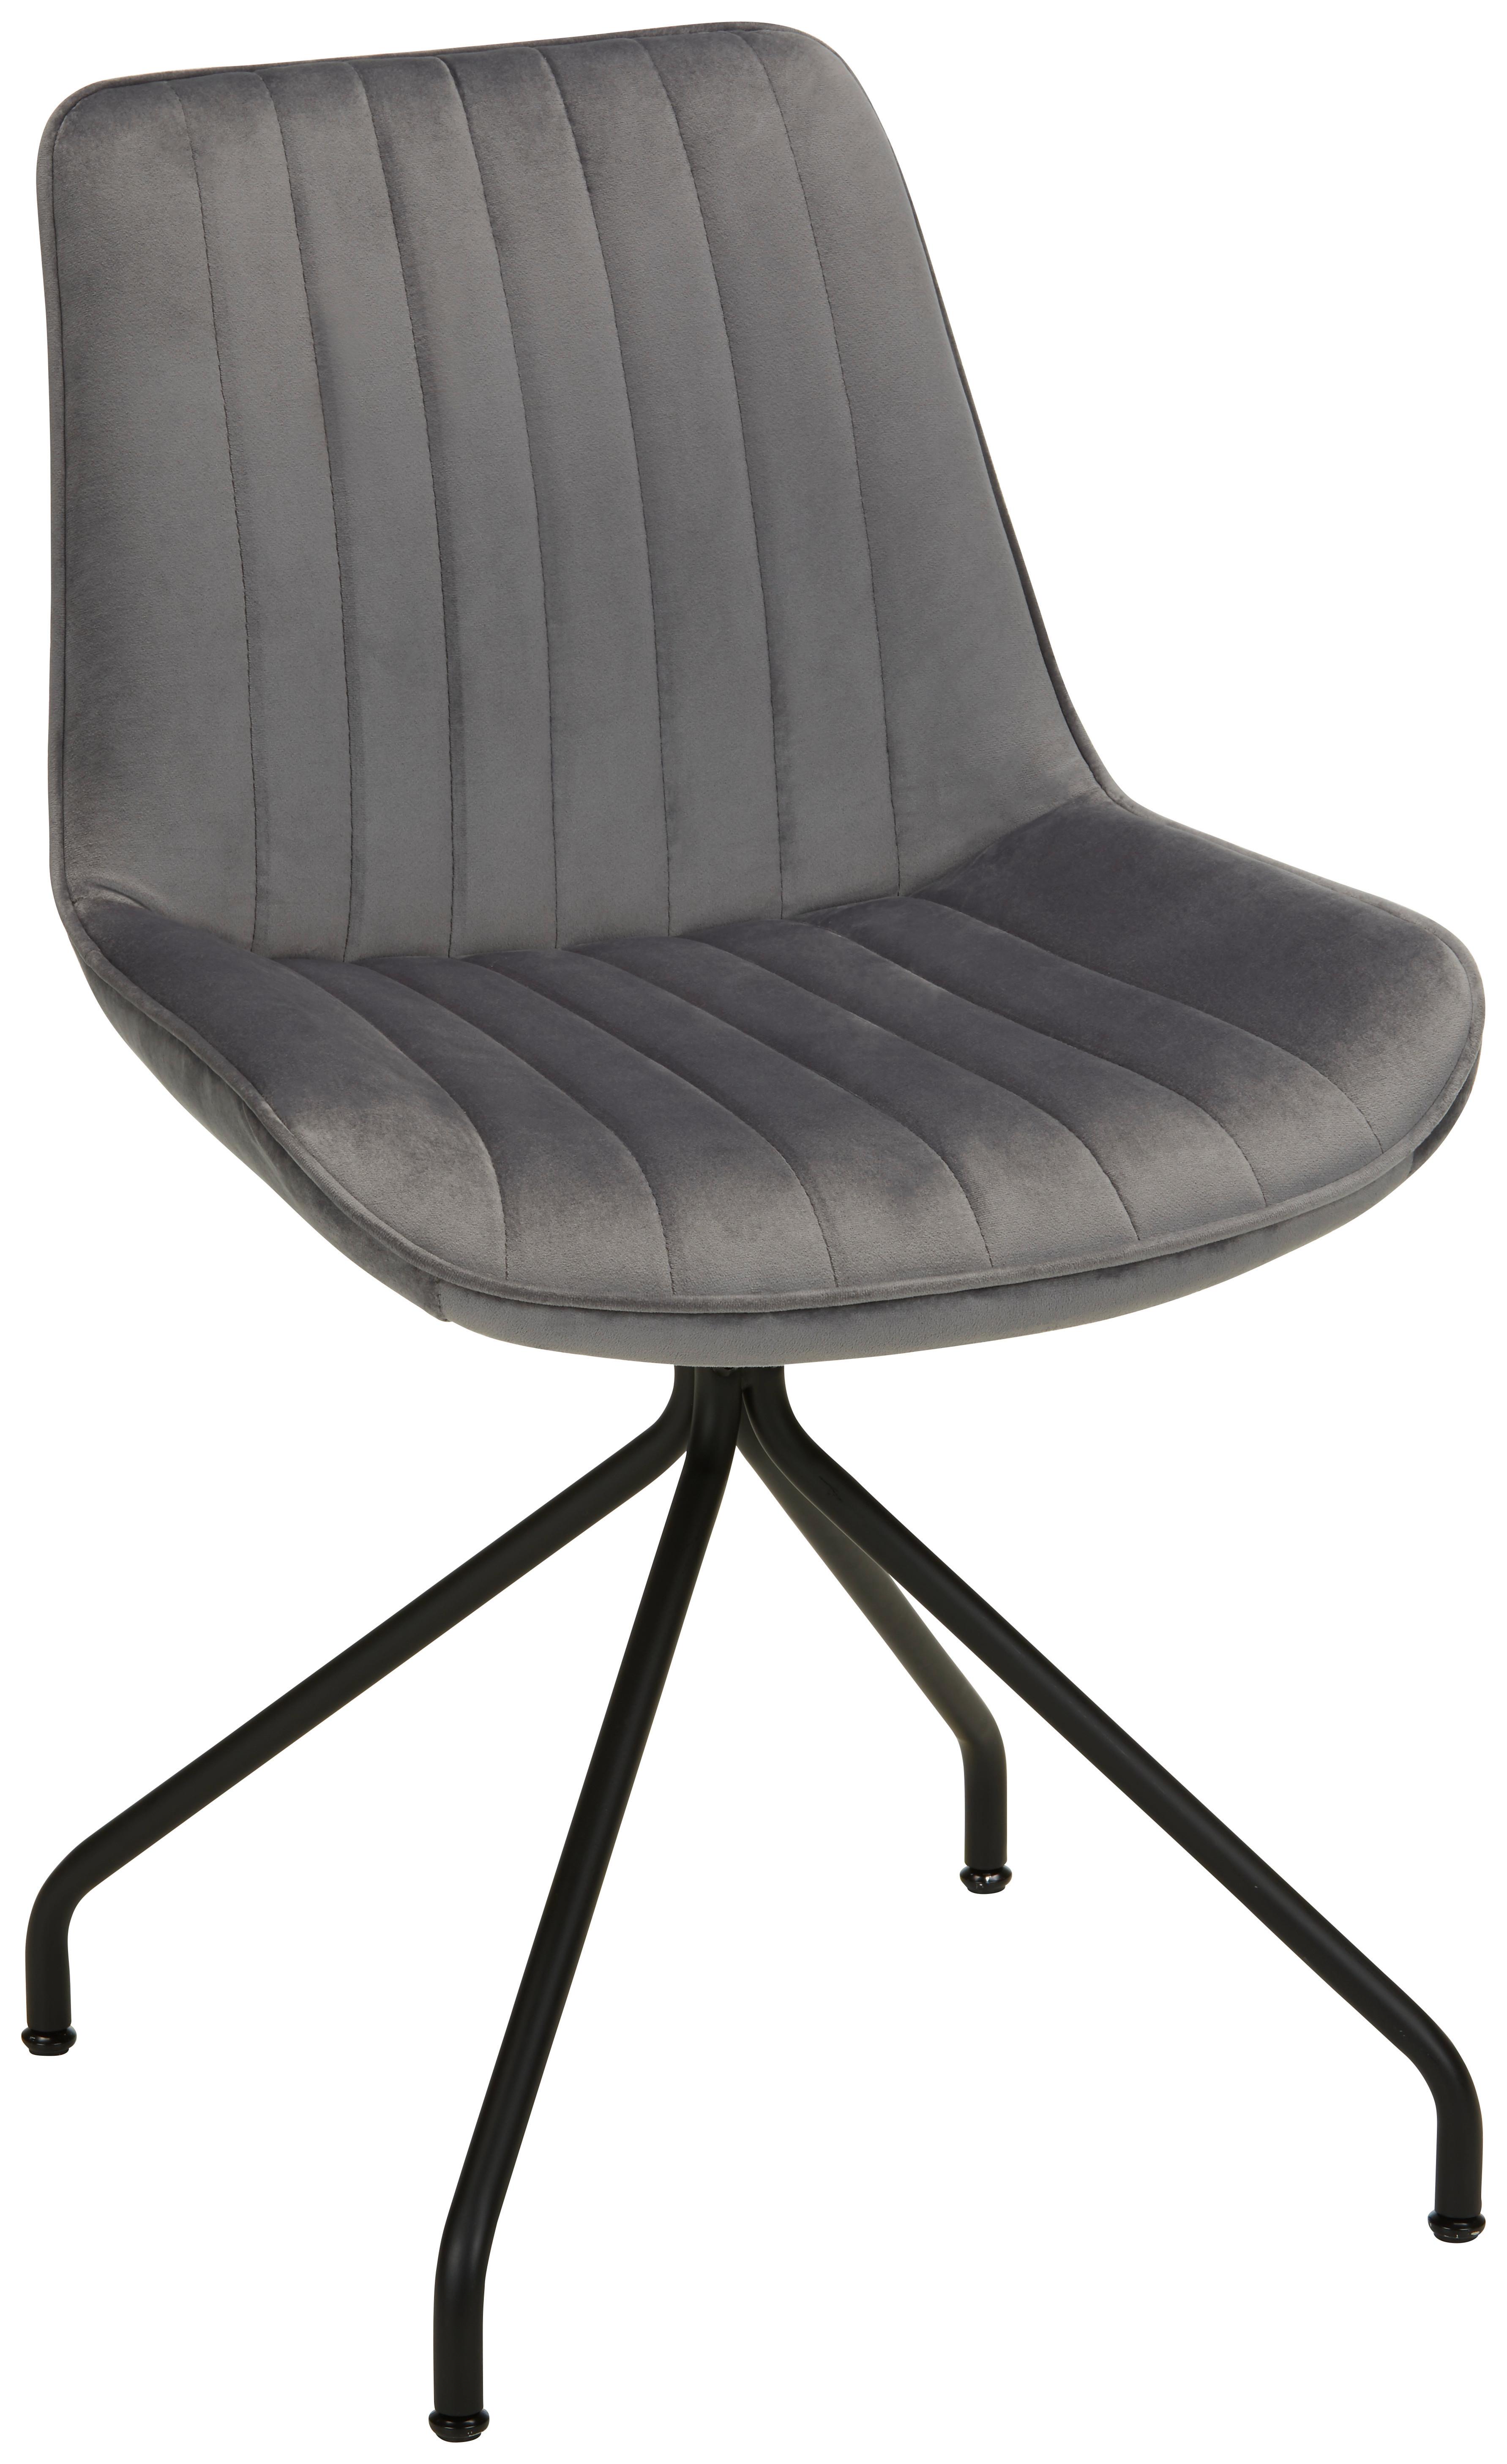 Stuhl aus Samt in Grau - Schwarz/Grau, MODERN, Textil/Metall (50/83,5/51cm) - Modern Living